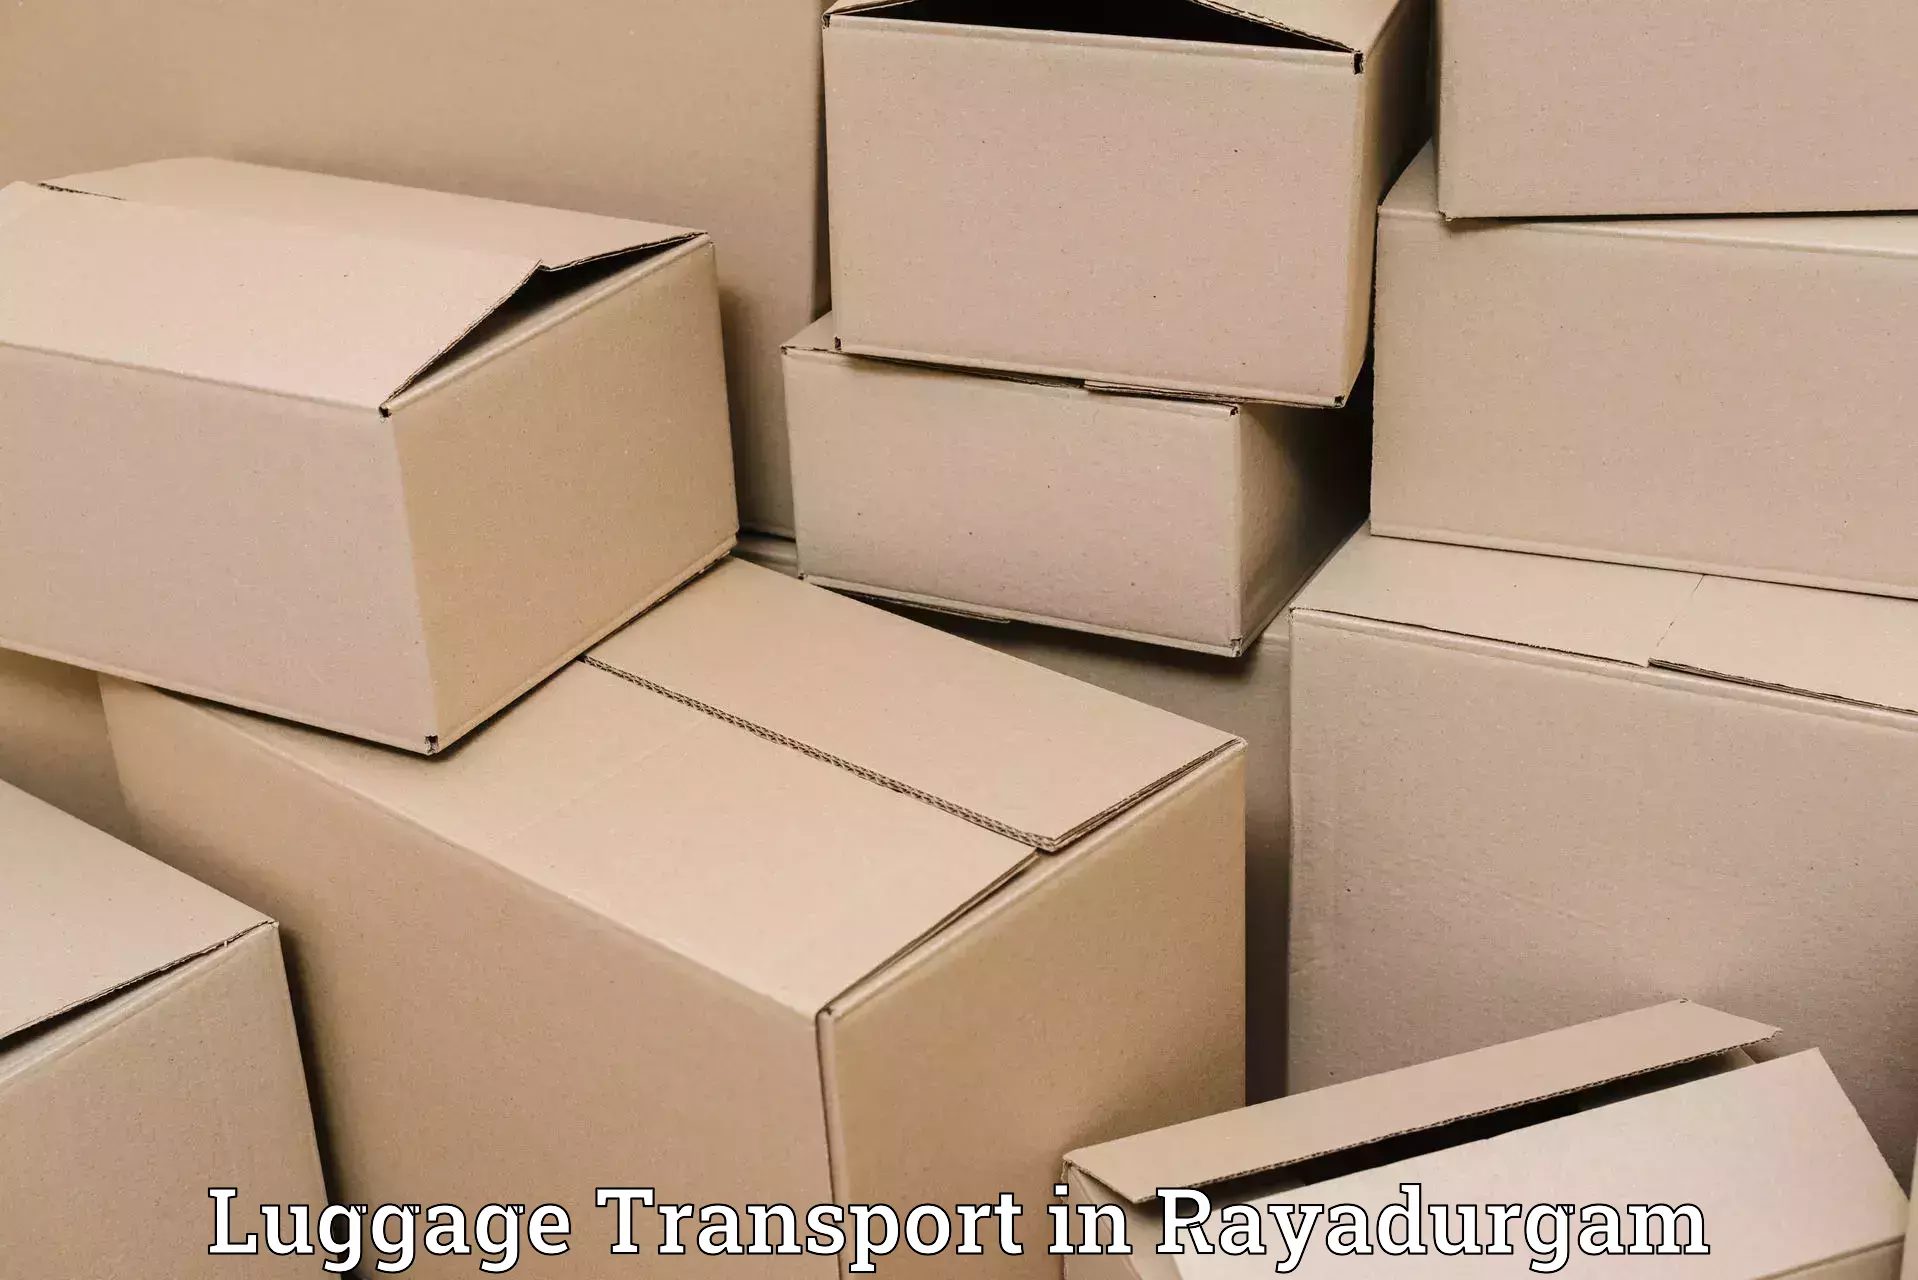 Holiday season luggage delivery in Rayadurgam